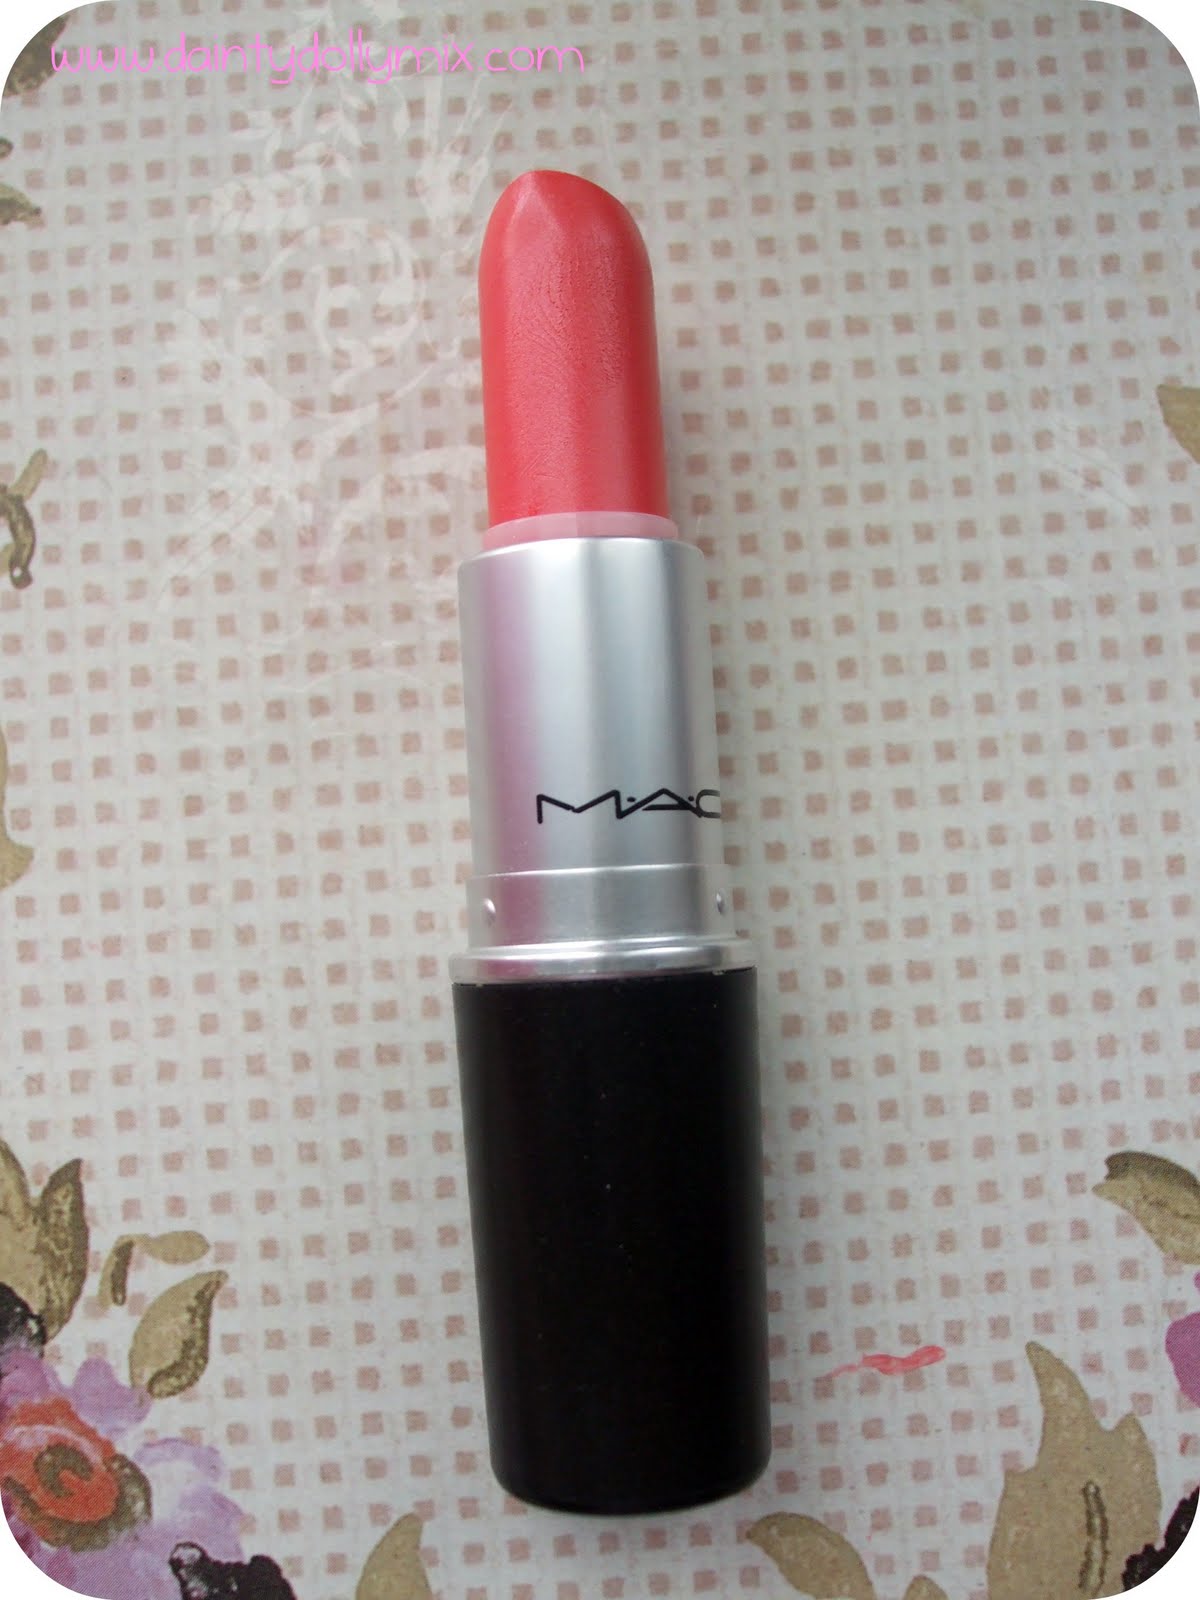 Dainty Dollymix Uk Beauty Blog Review Mac Costa Chic Lipstick